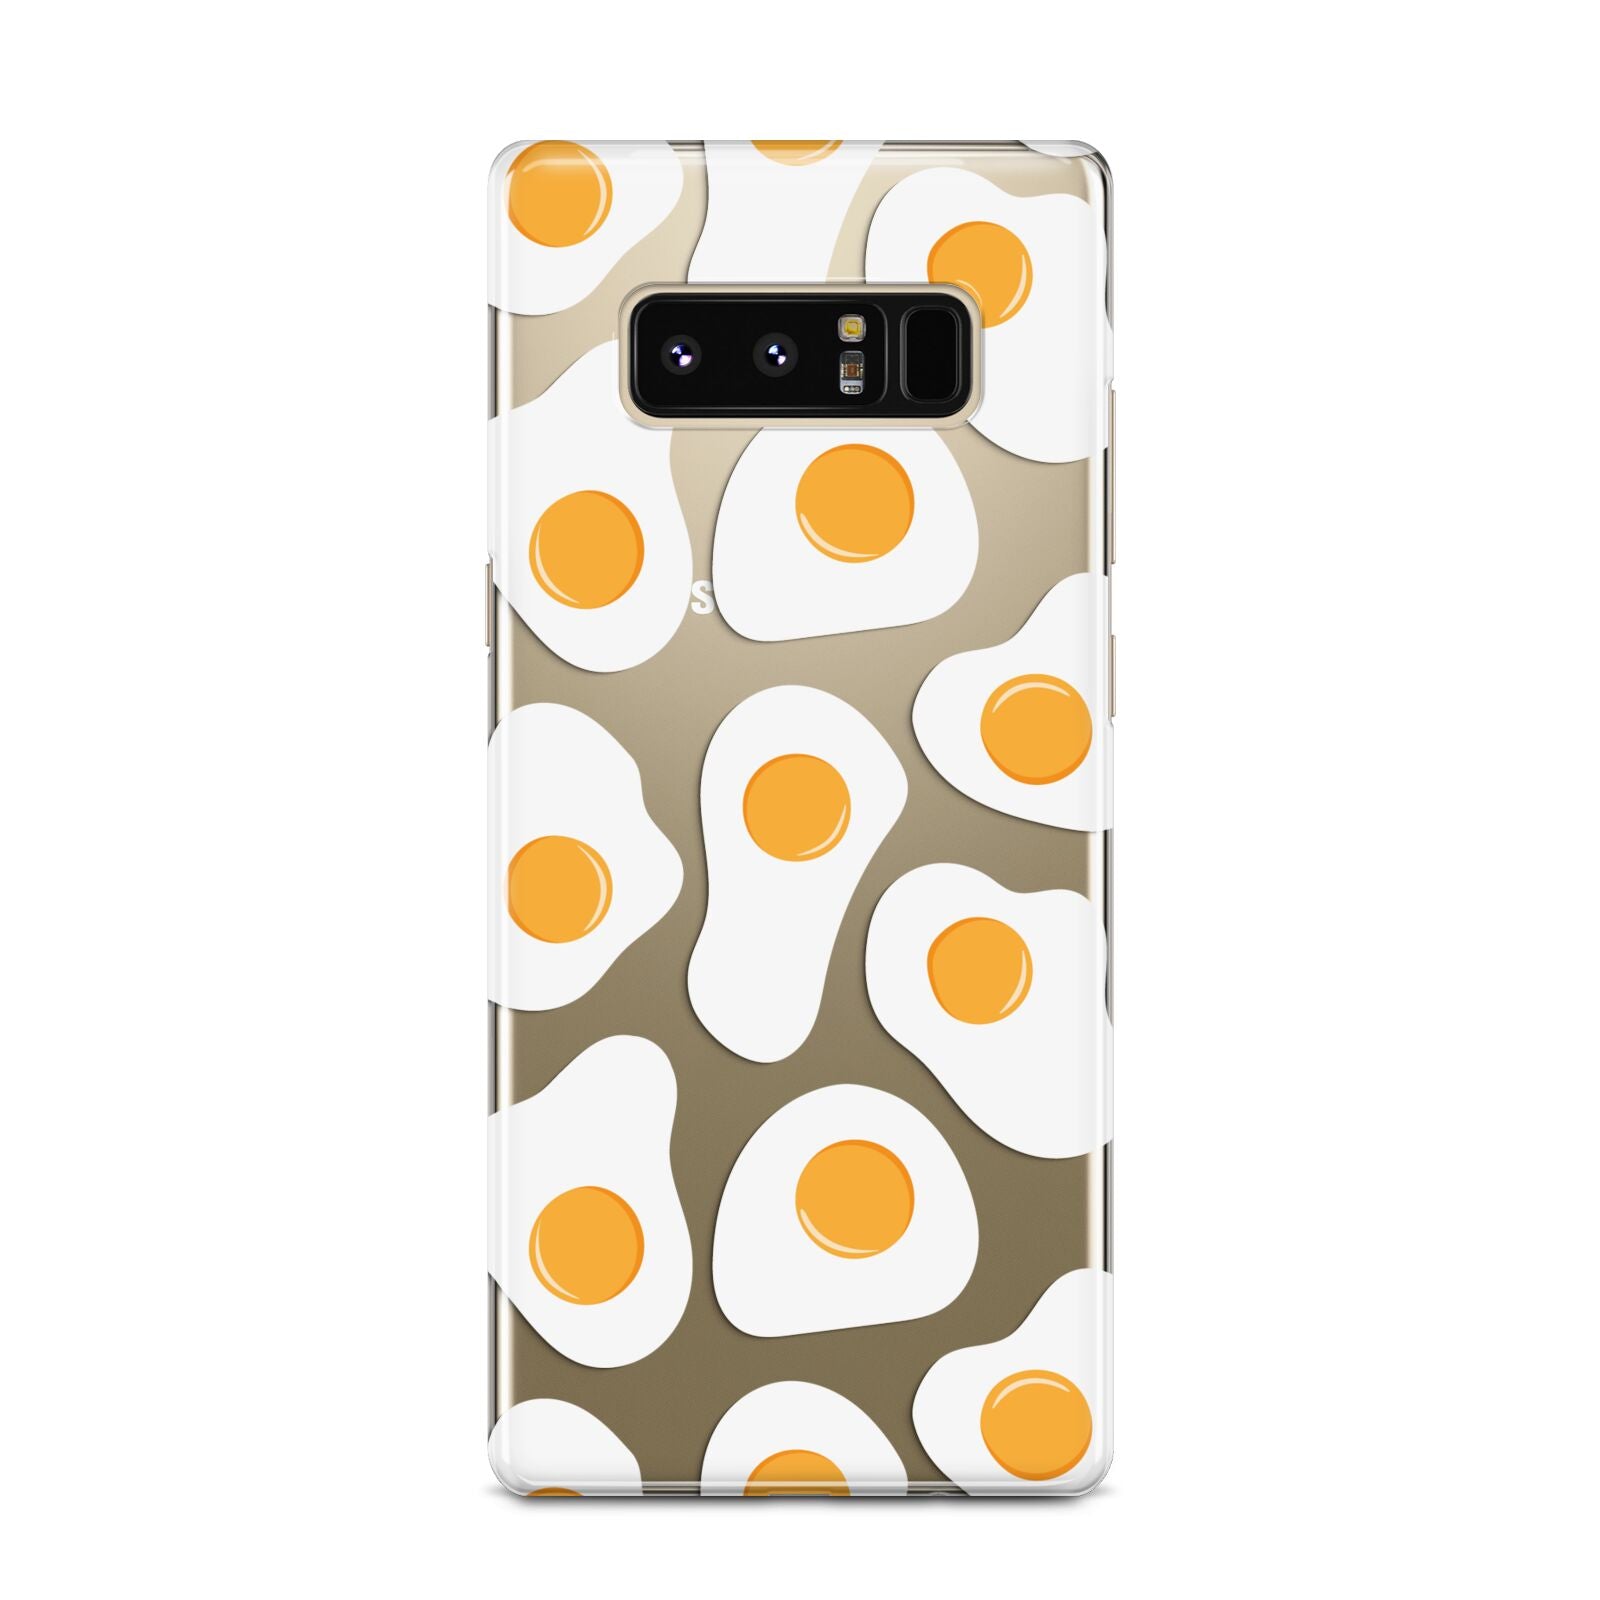 Fried Egg Samsung Galaxy Note 8 Case